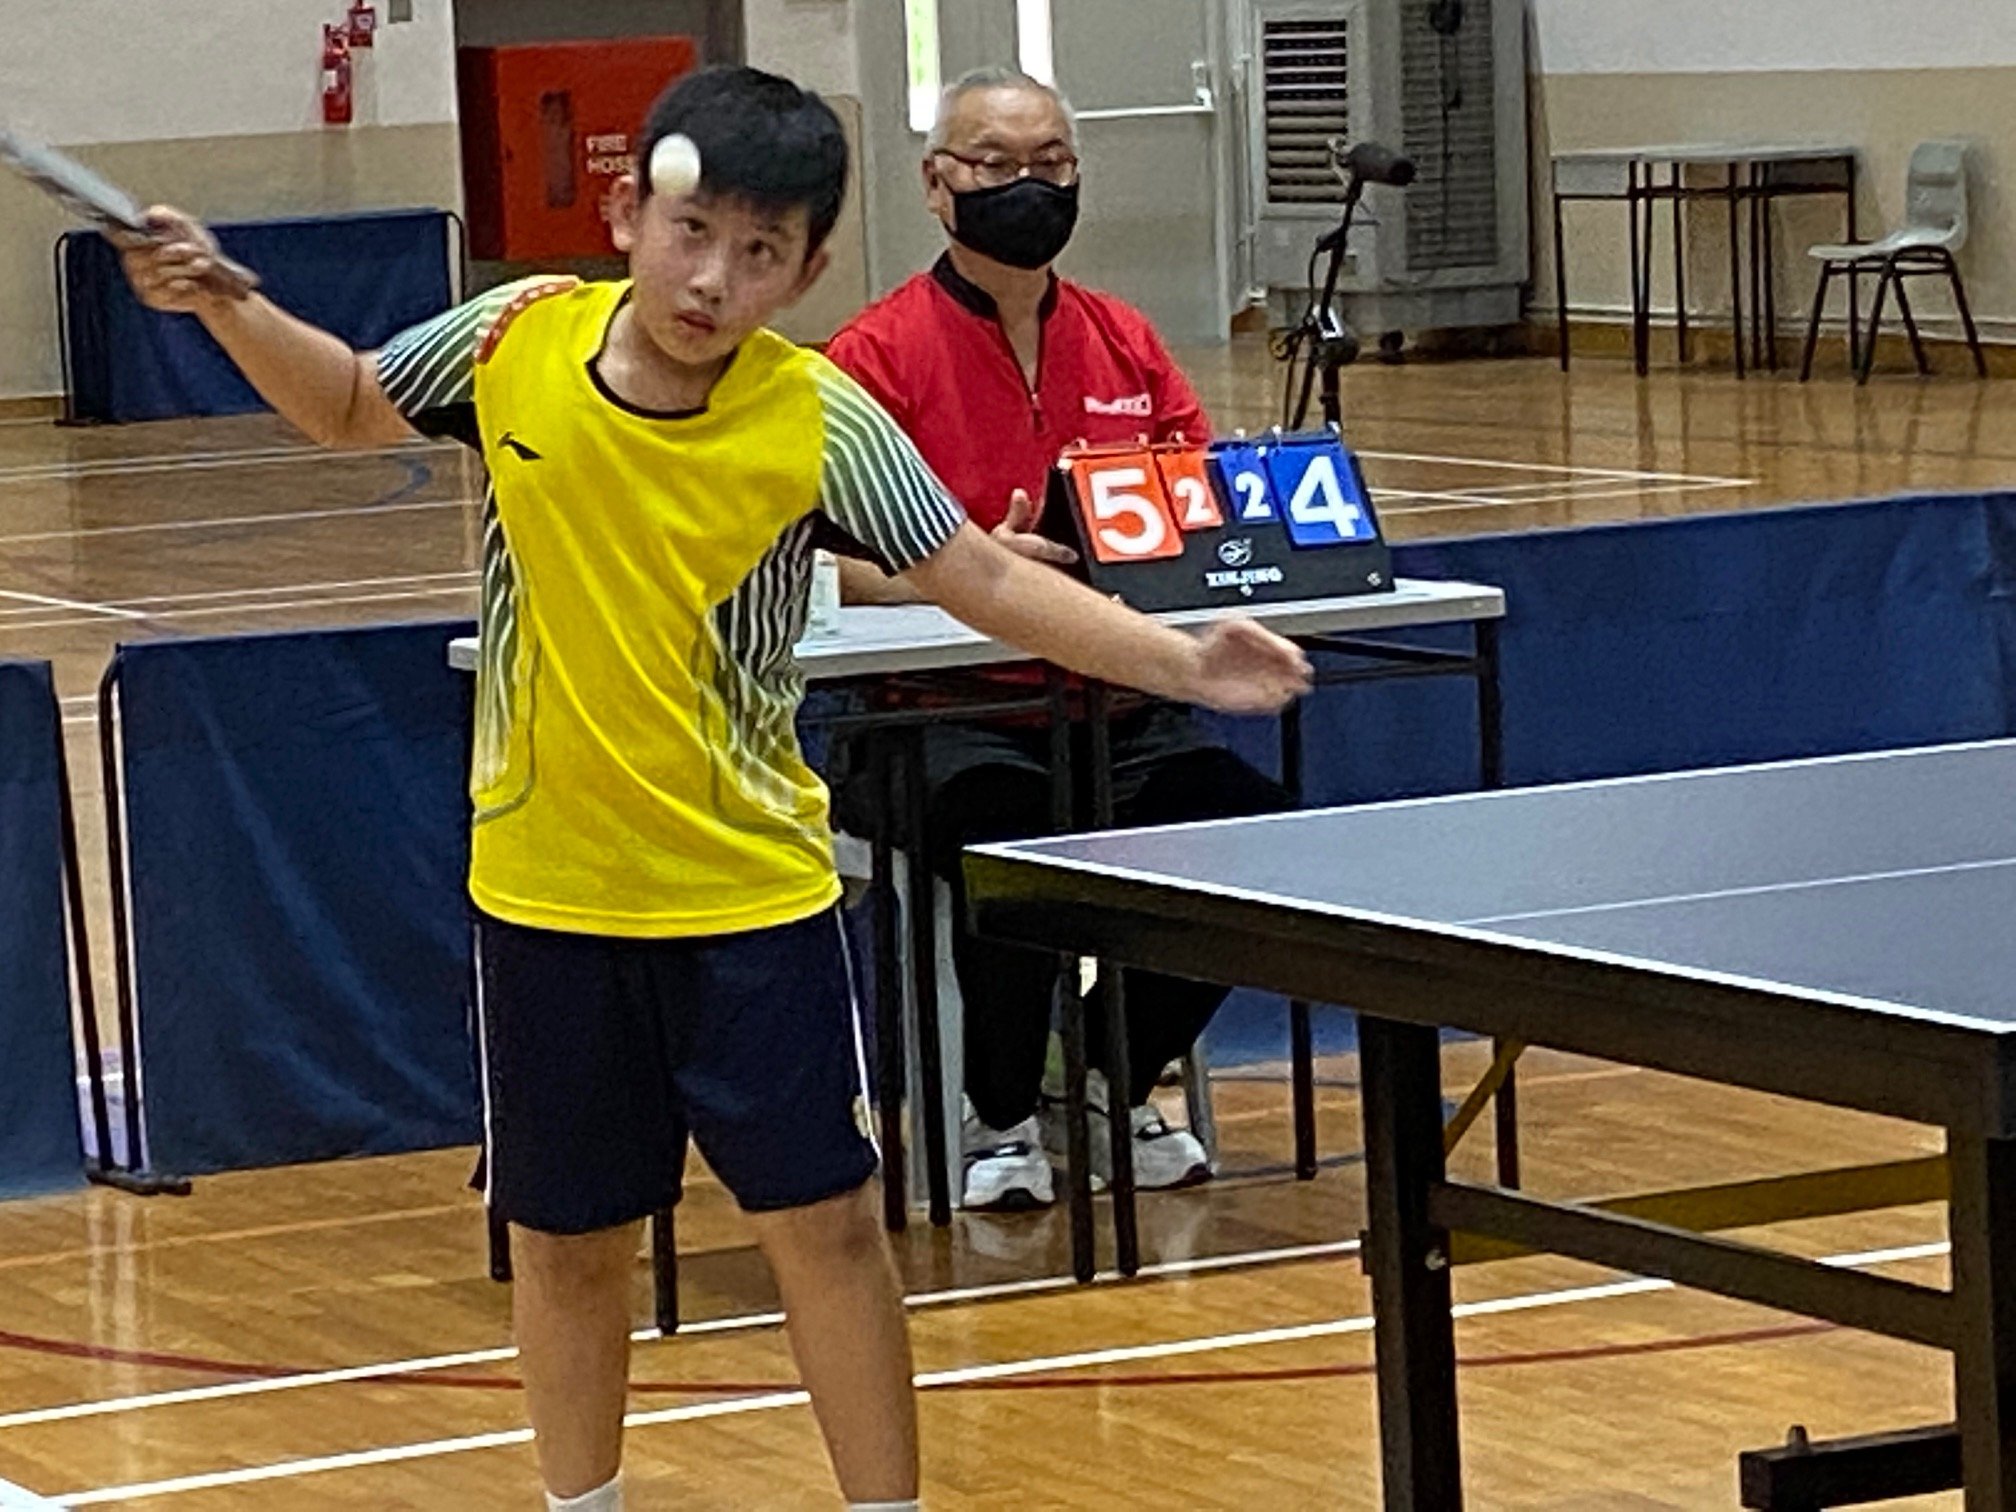 NSG East Zone Snr Div boys table tennis final - Kong Hwas Ang Ray Tze